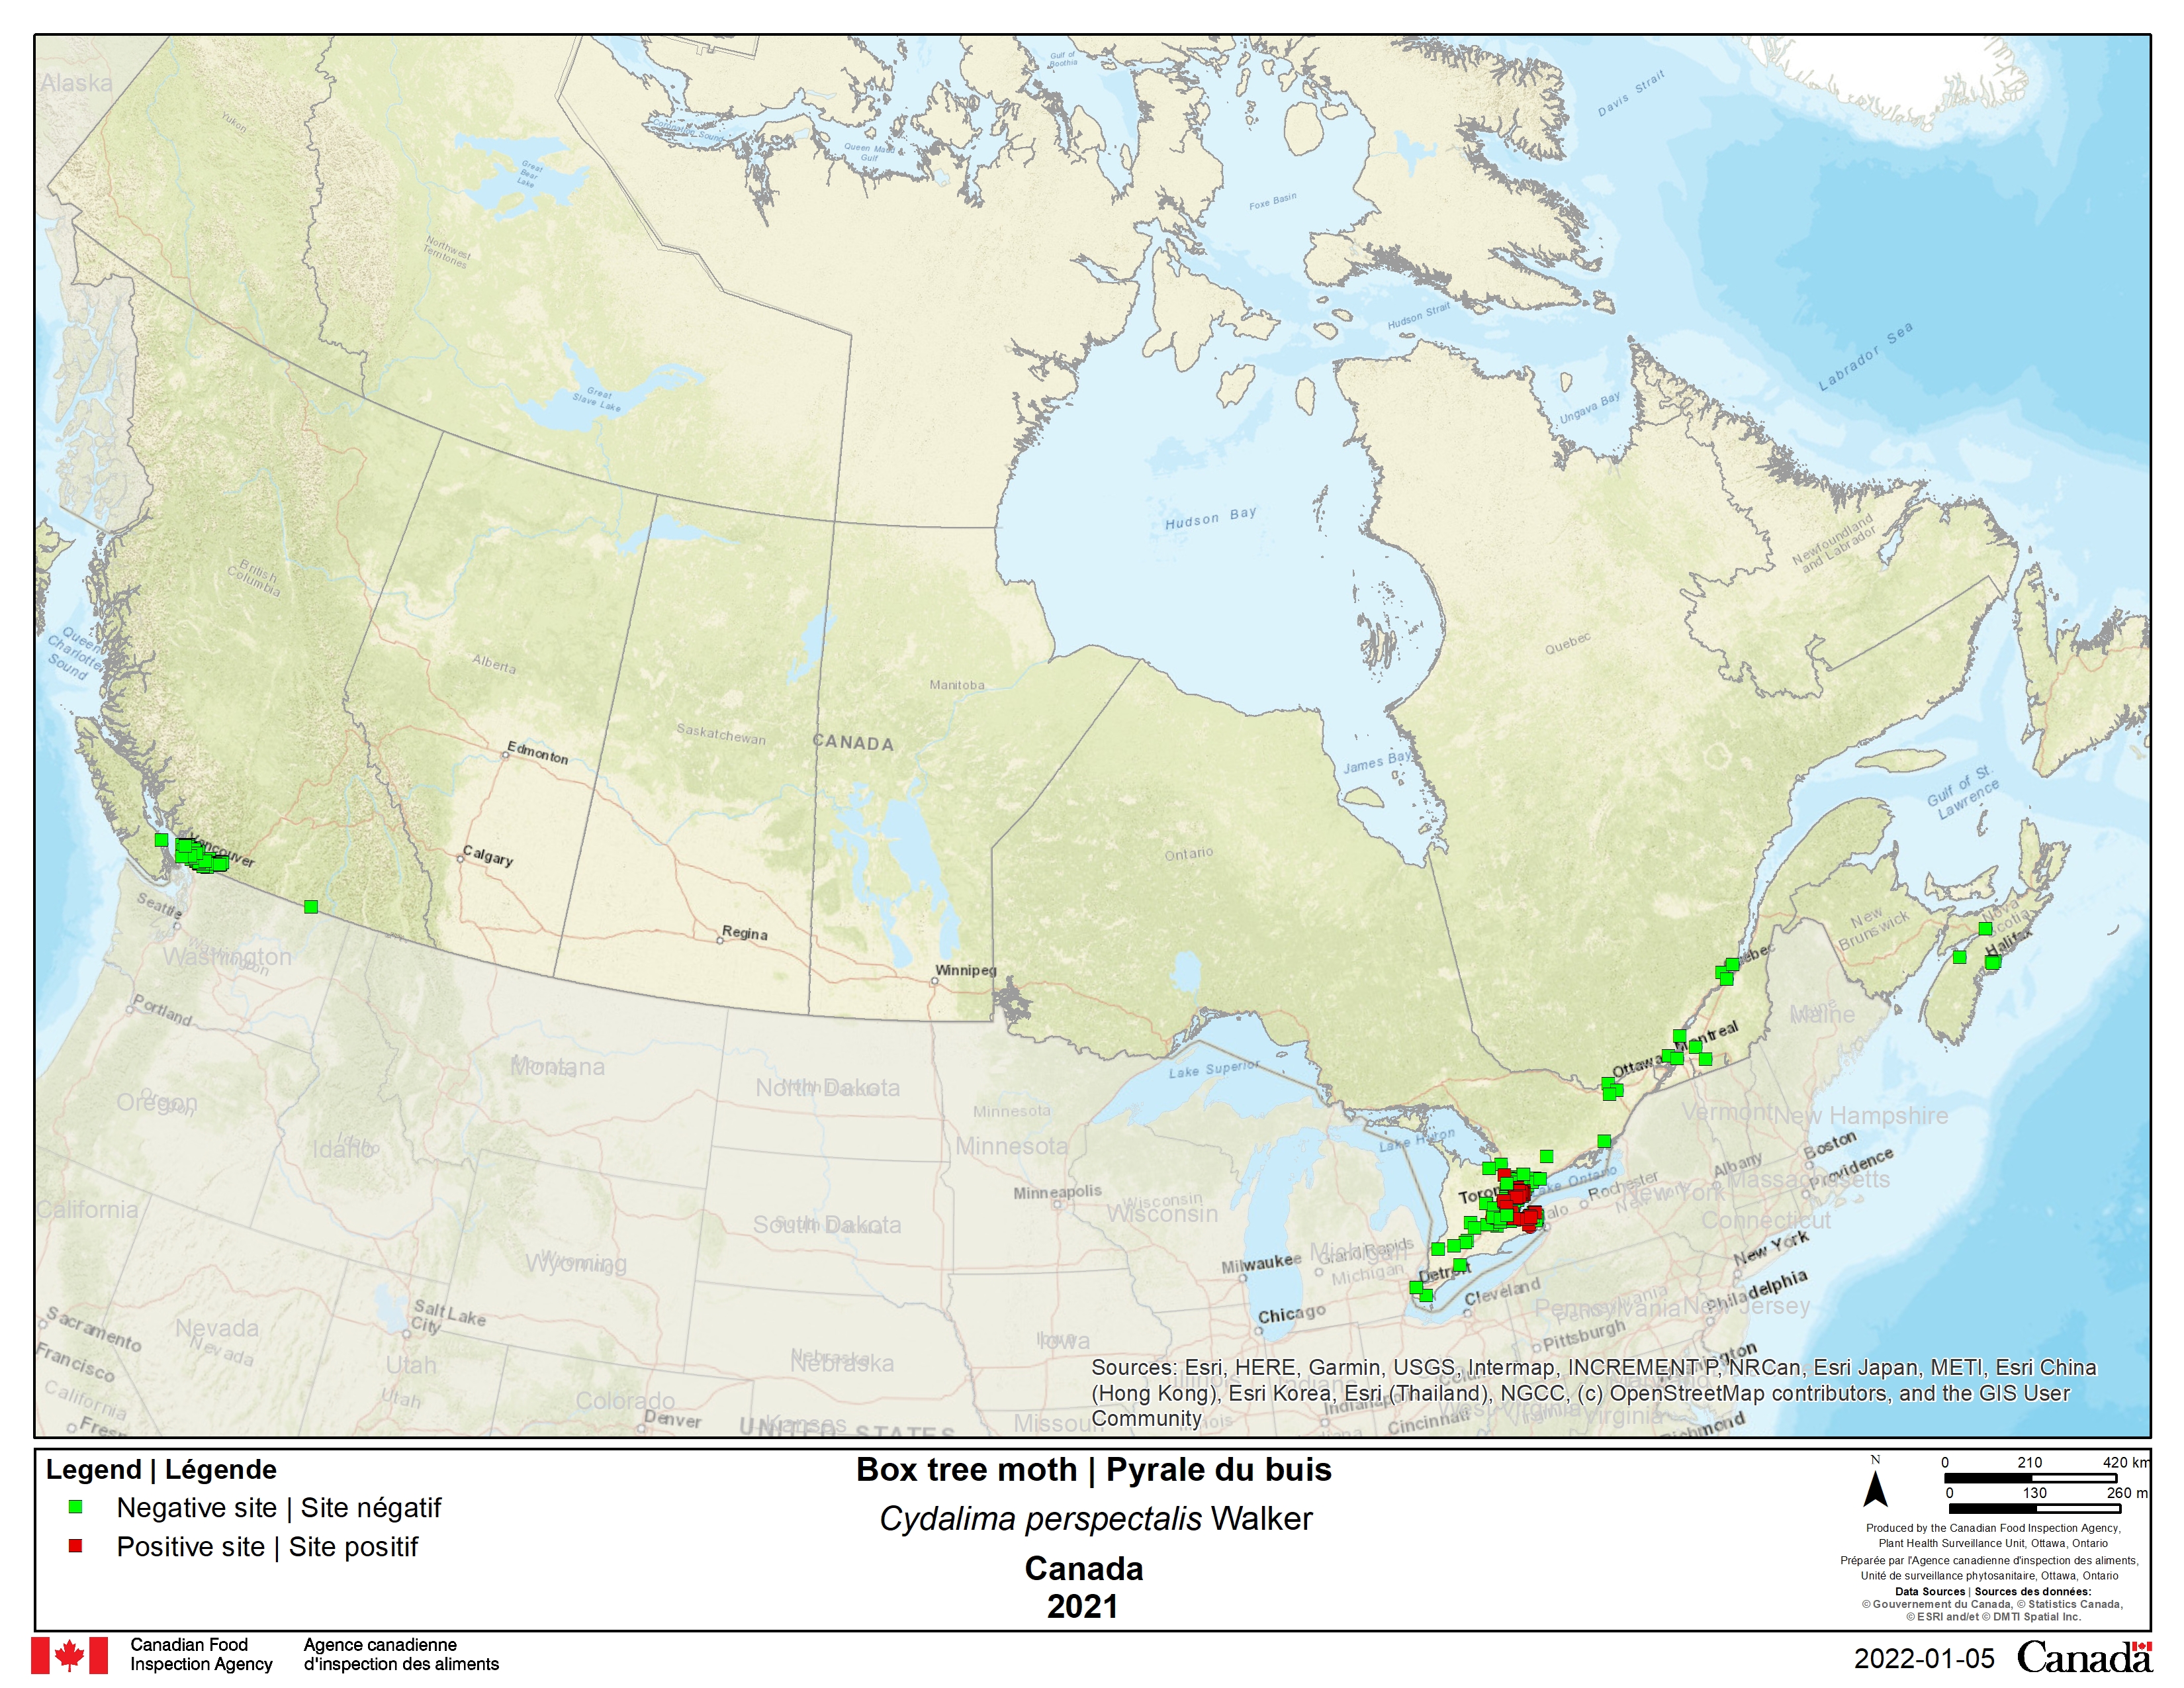 Figure 2 - Box tree moth 2021 survey results for Canada (BC, ON, QC, NS). Description follows.